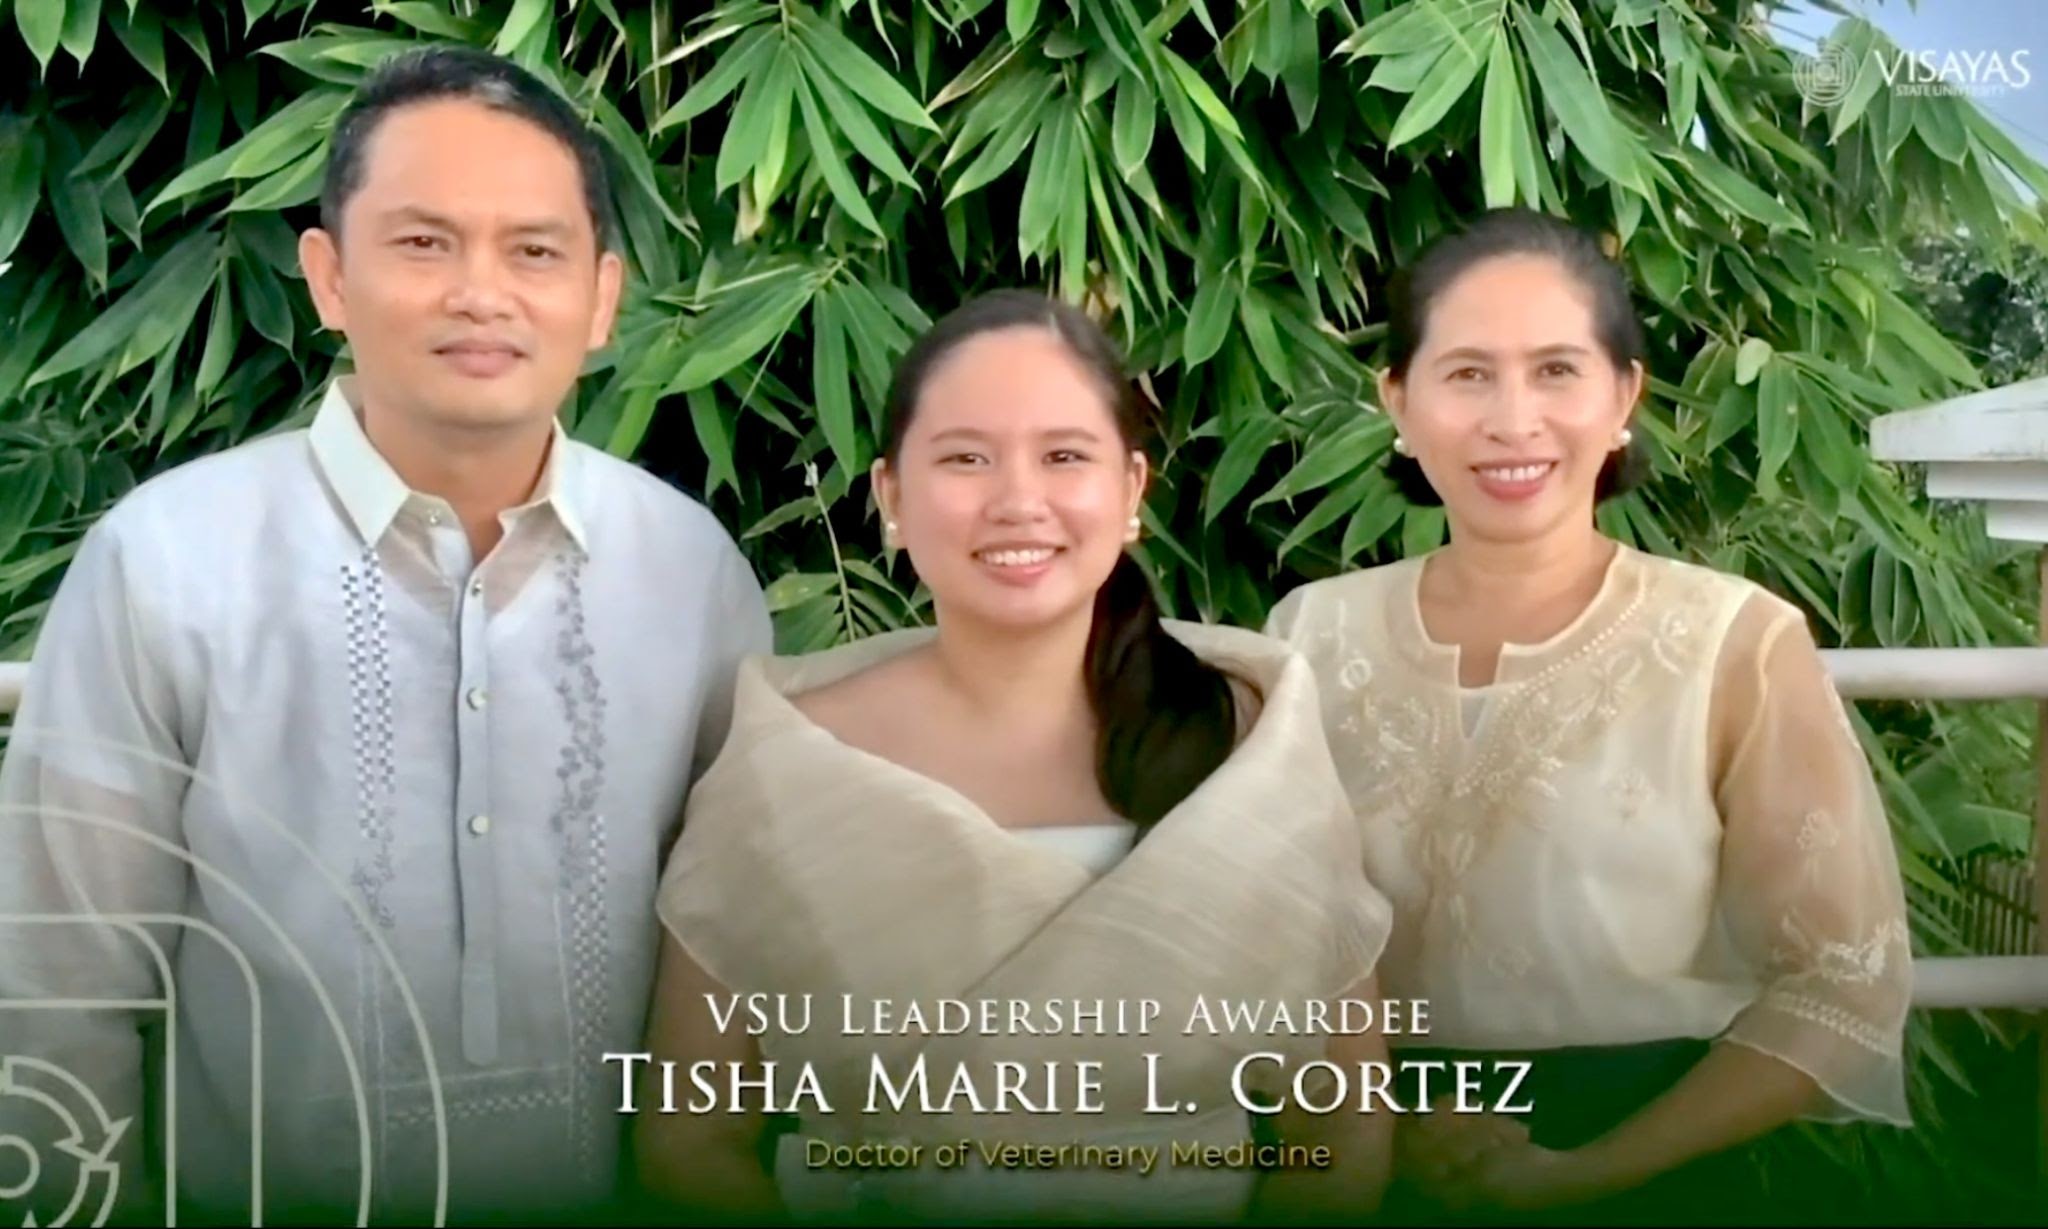 Ms. Tisha Marie L. Cortez